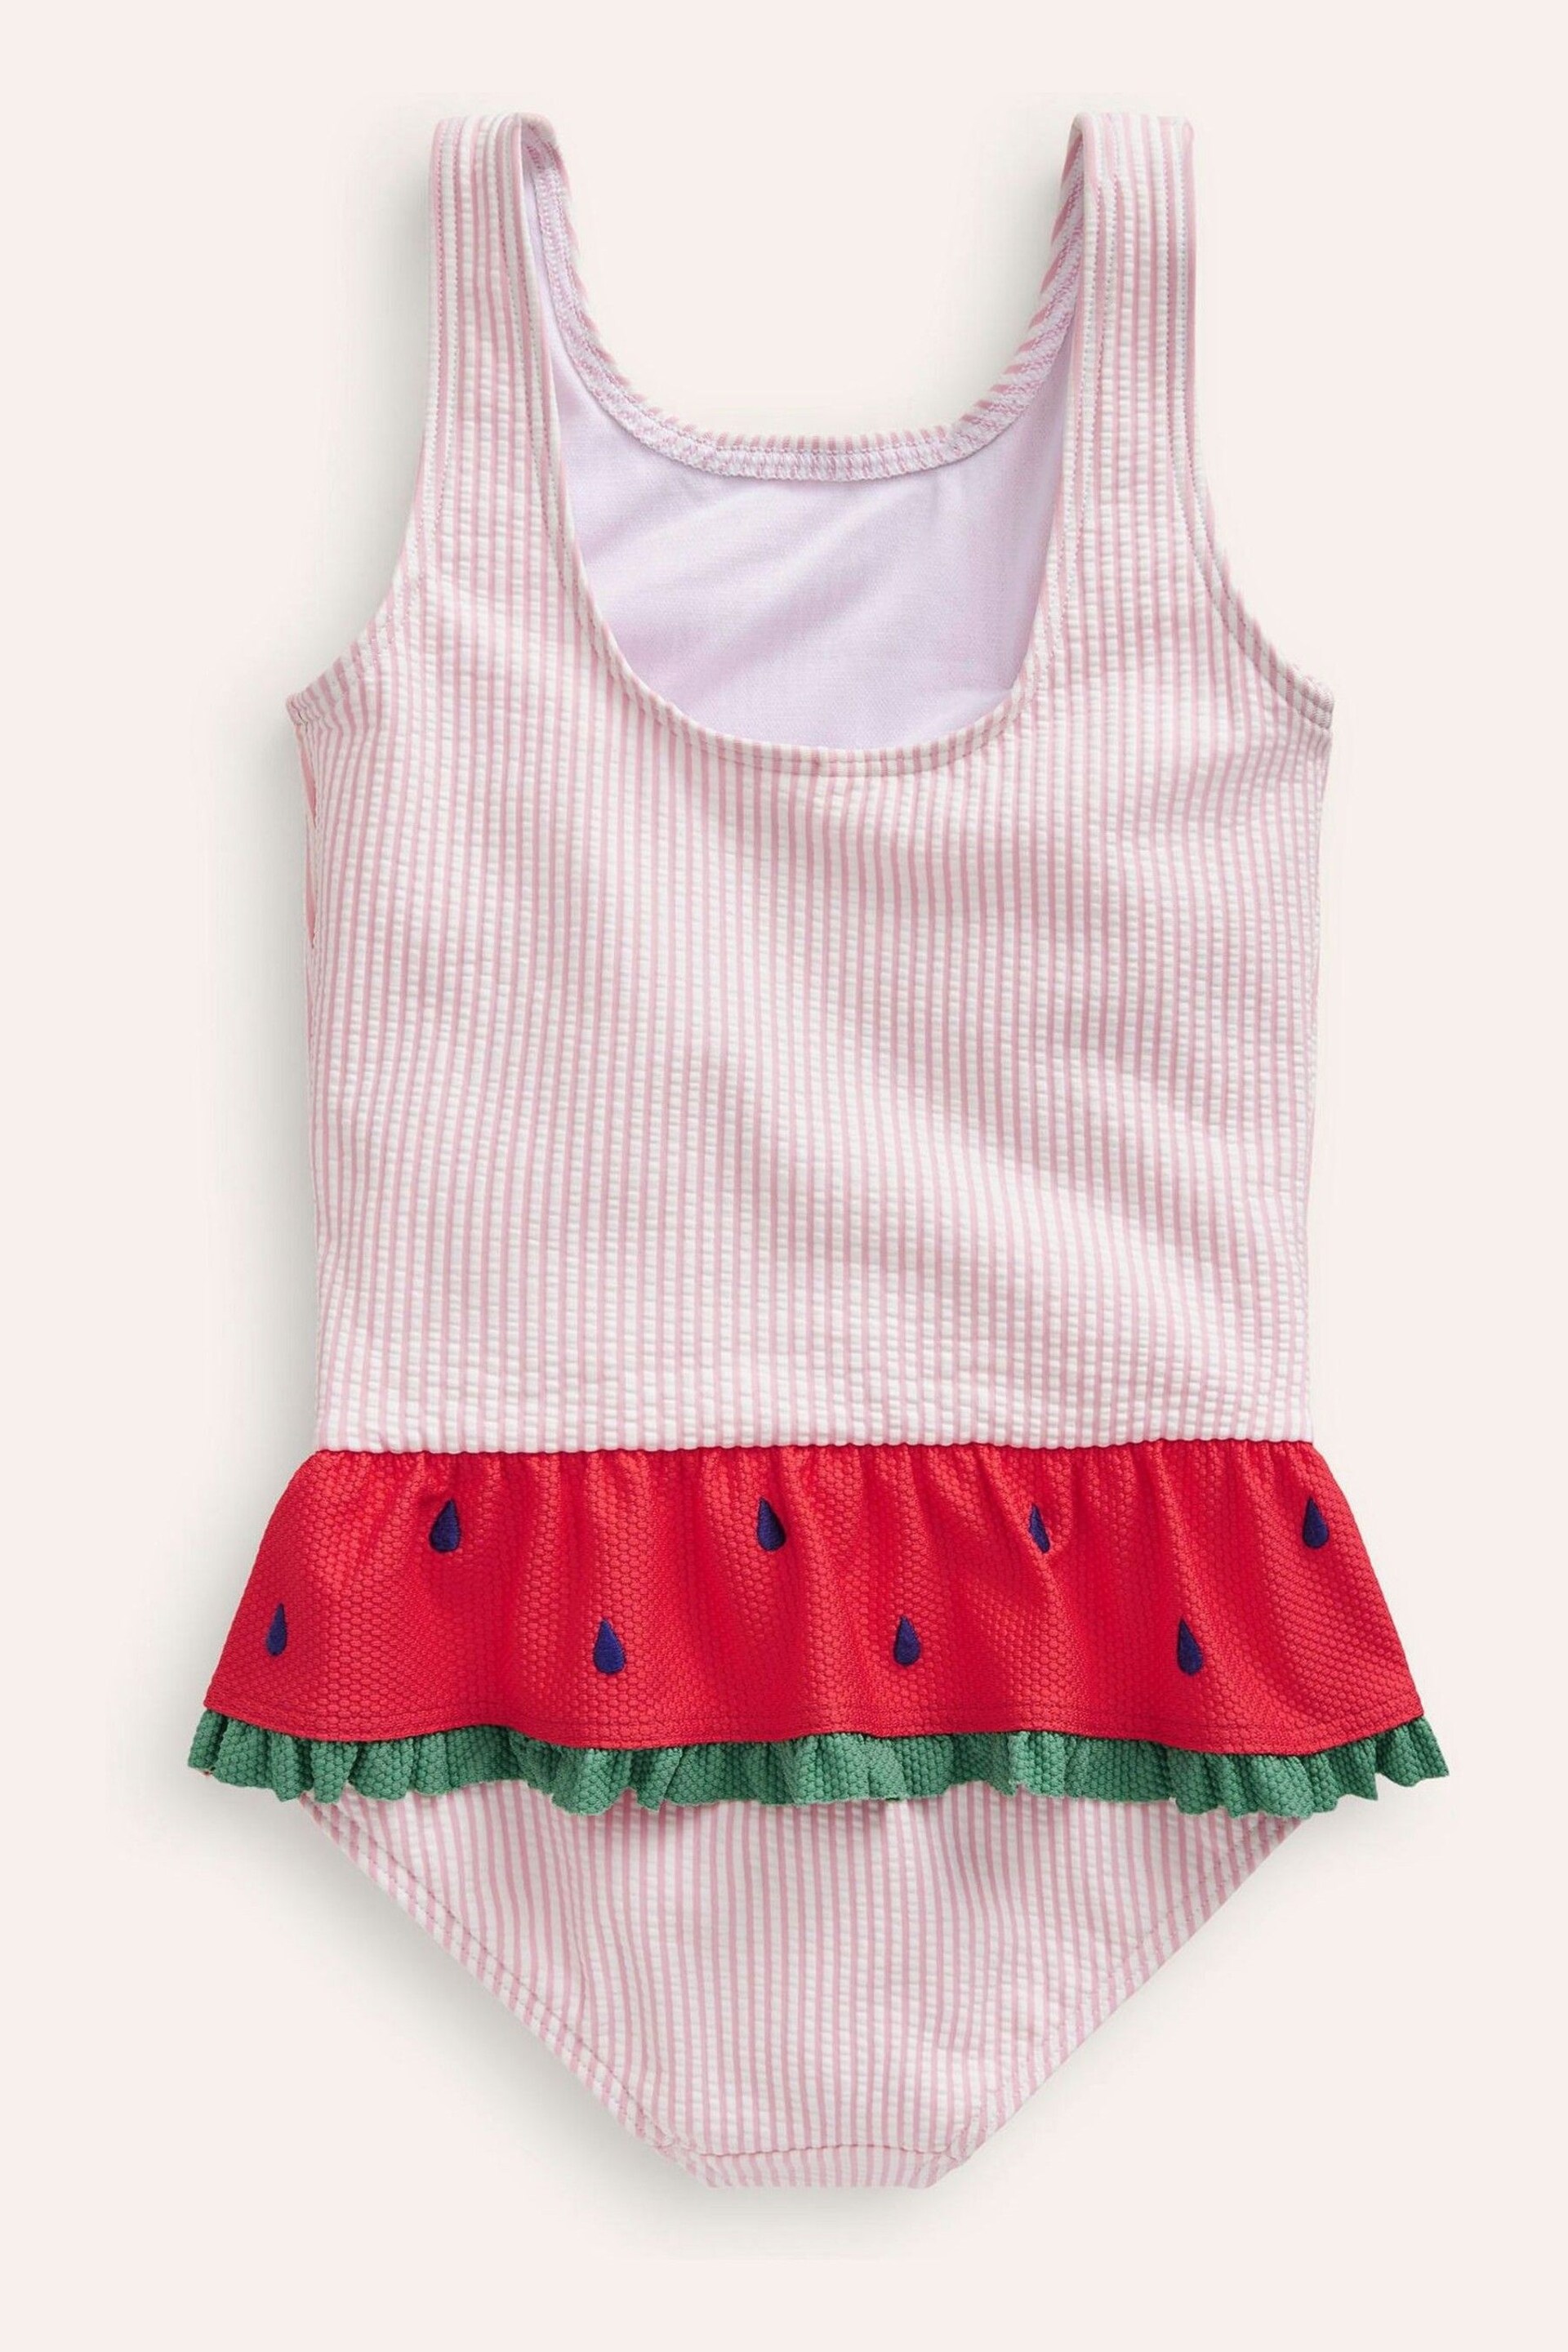 Boden Pink Watermelon Peplum Swimsuit - Image 2 of 4